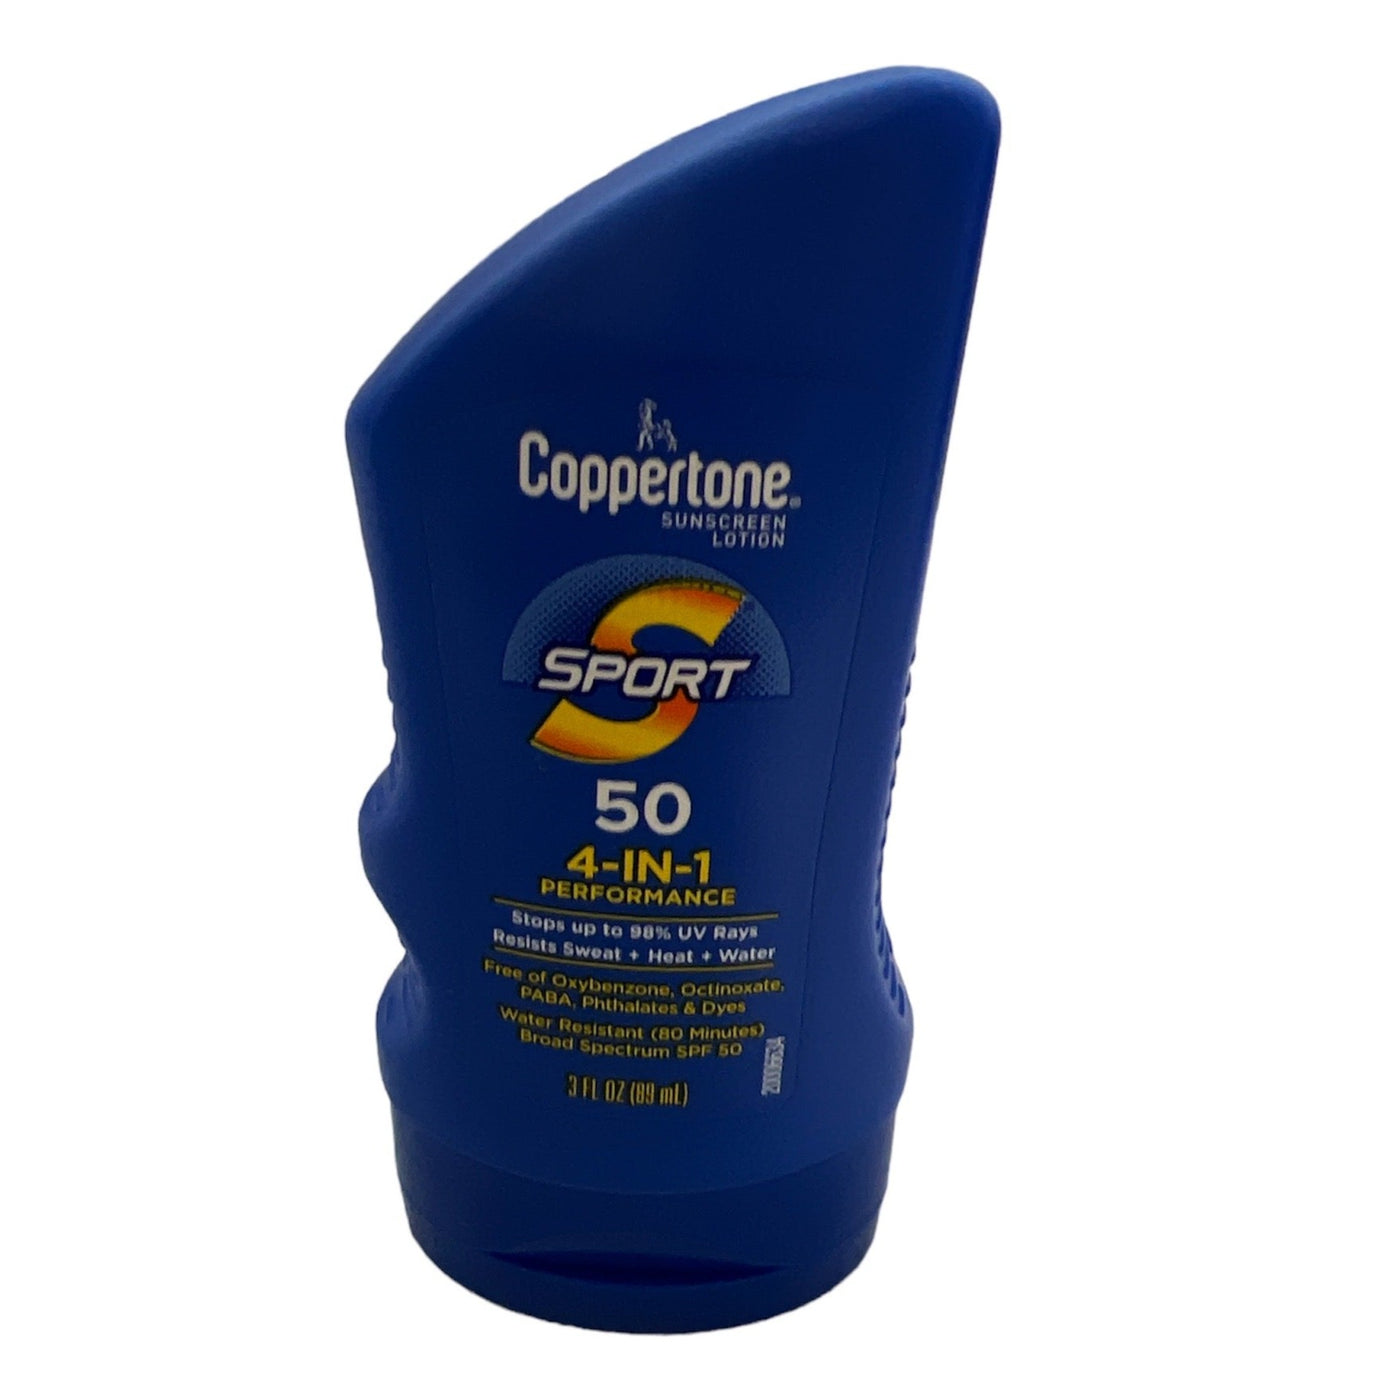 Coppertone Sport 50 4-in-1